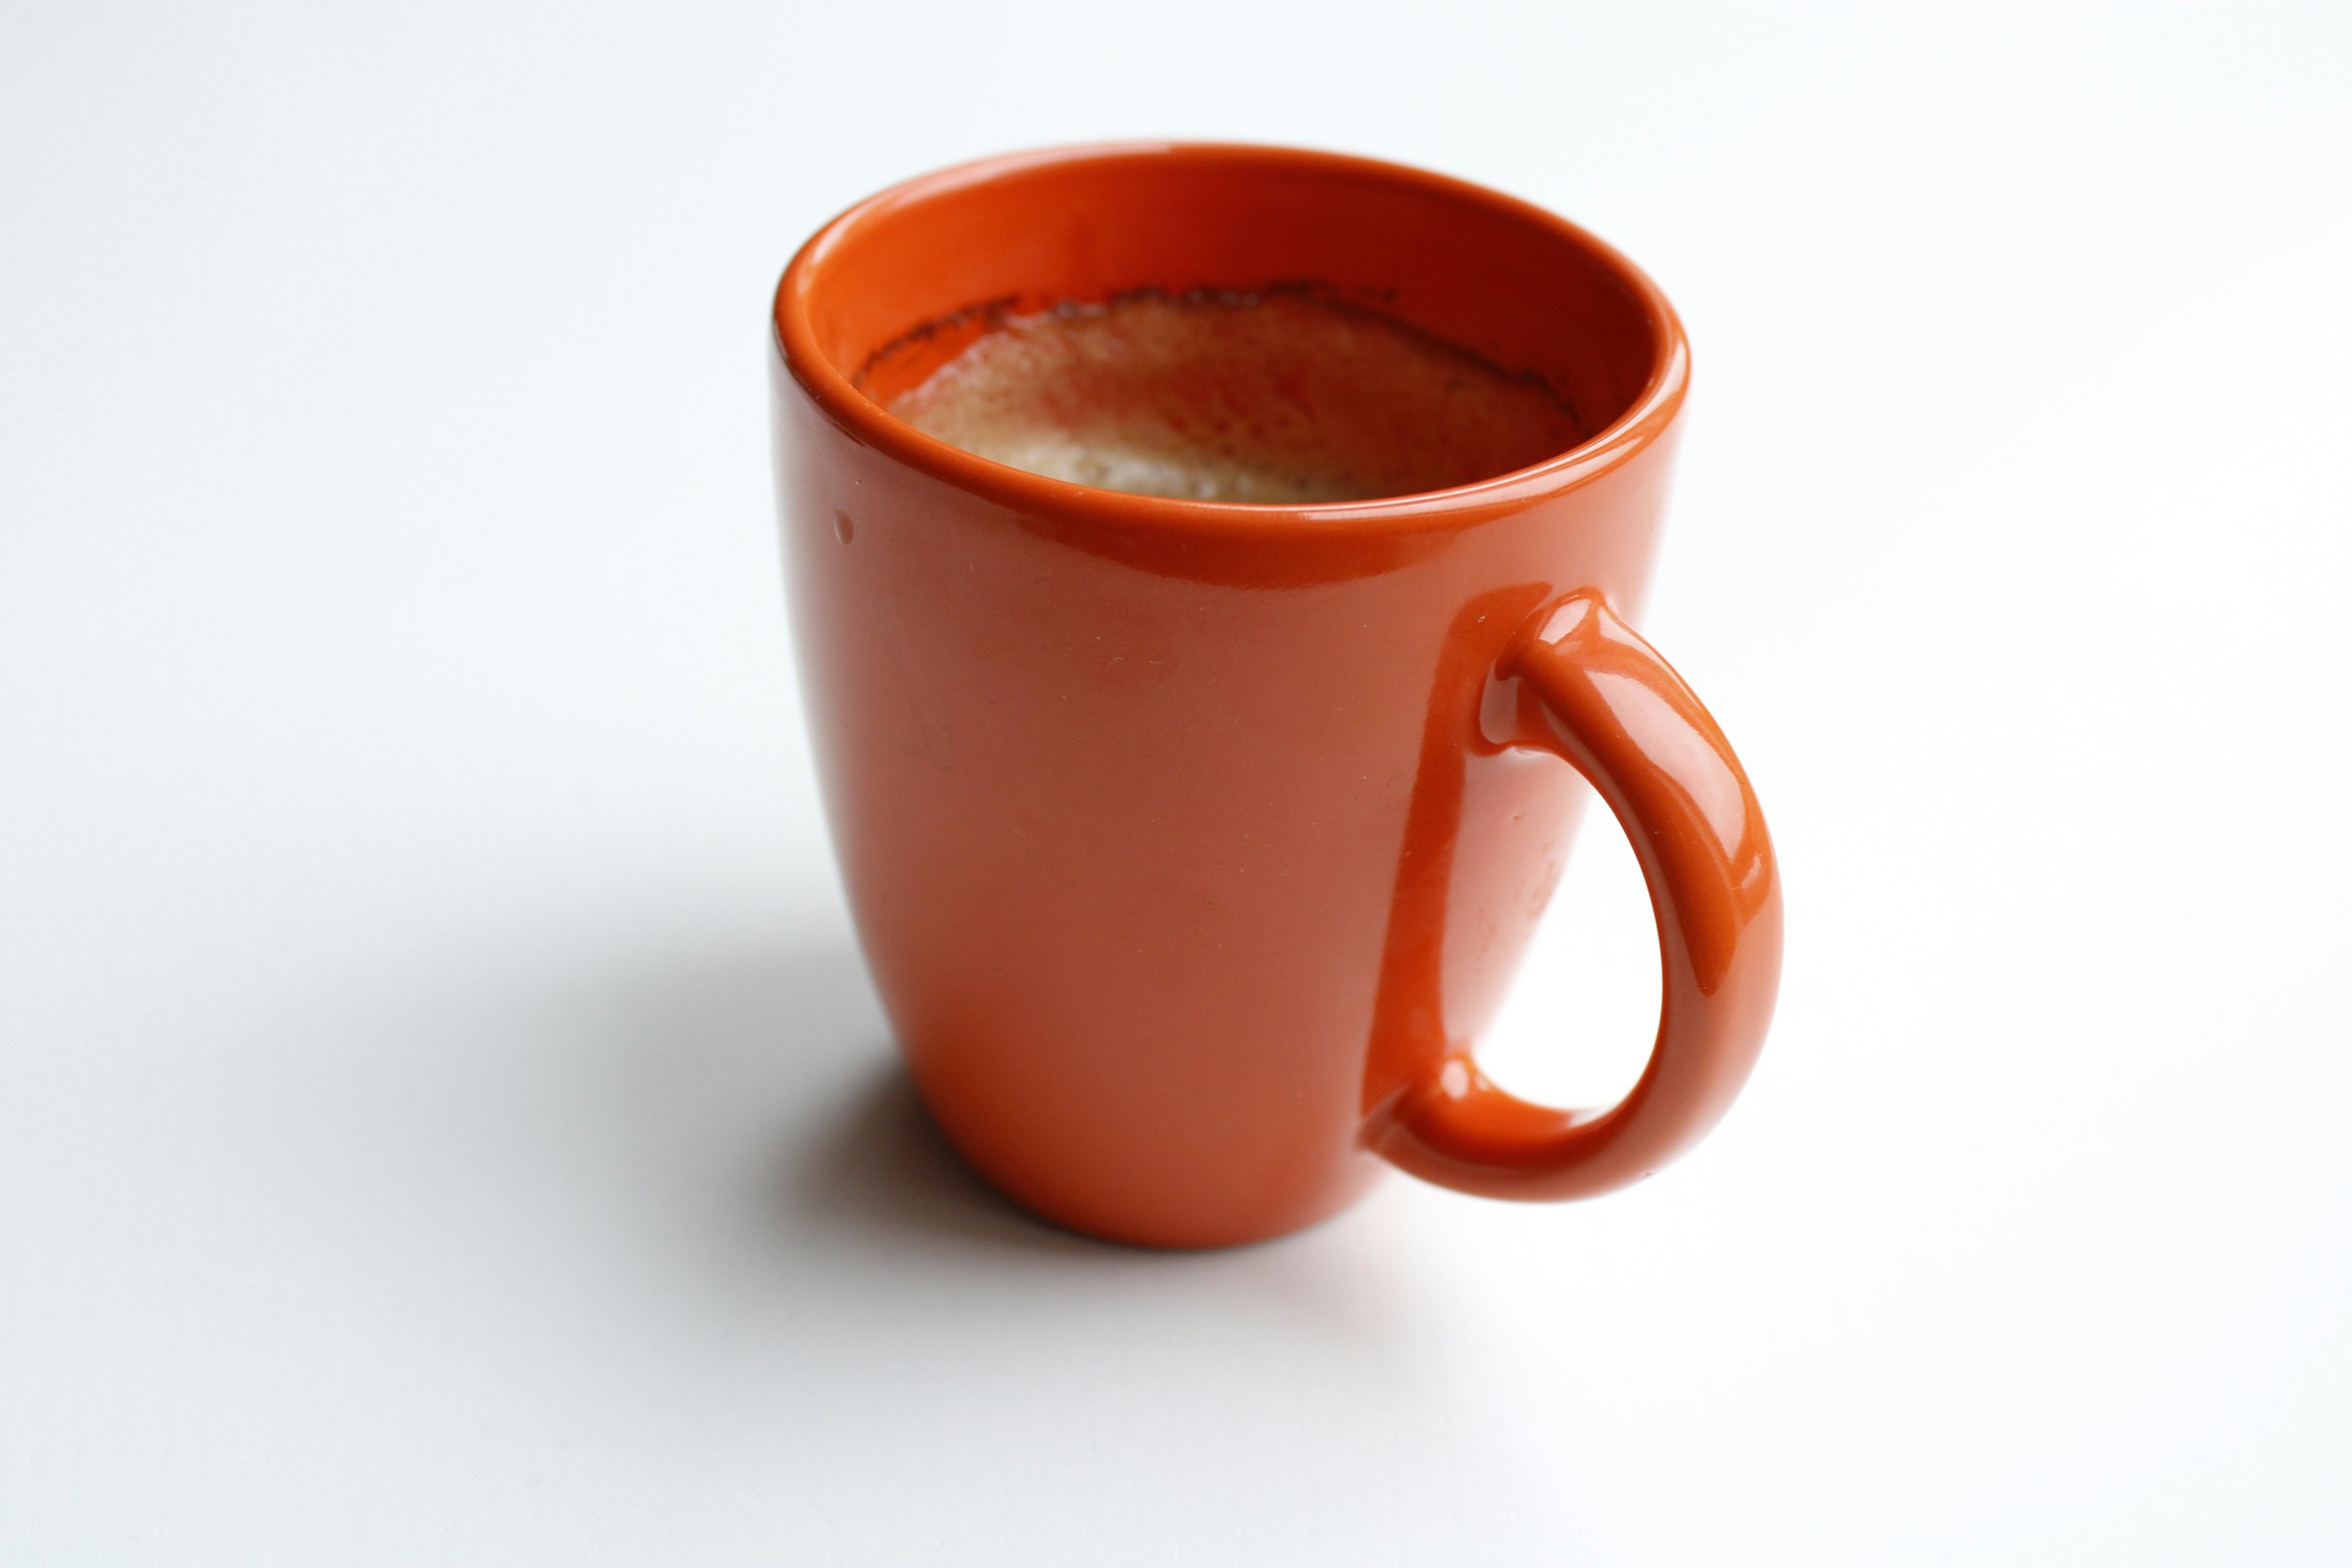 A mug of coffee | Source: Unsplash